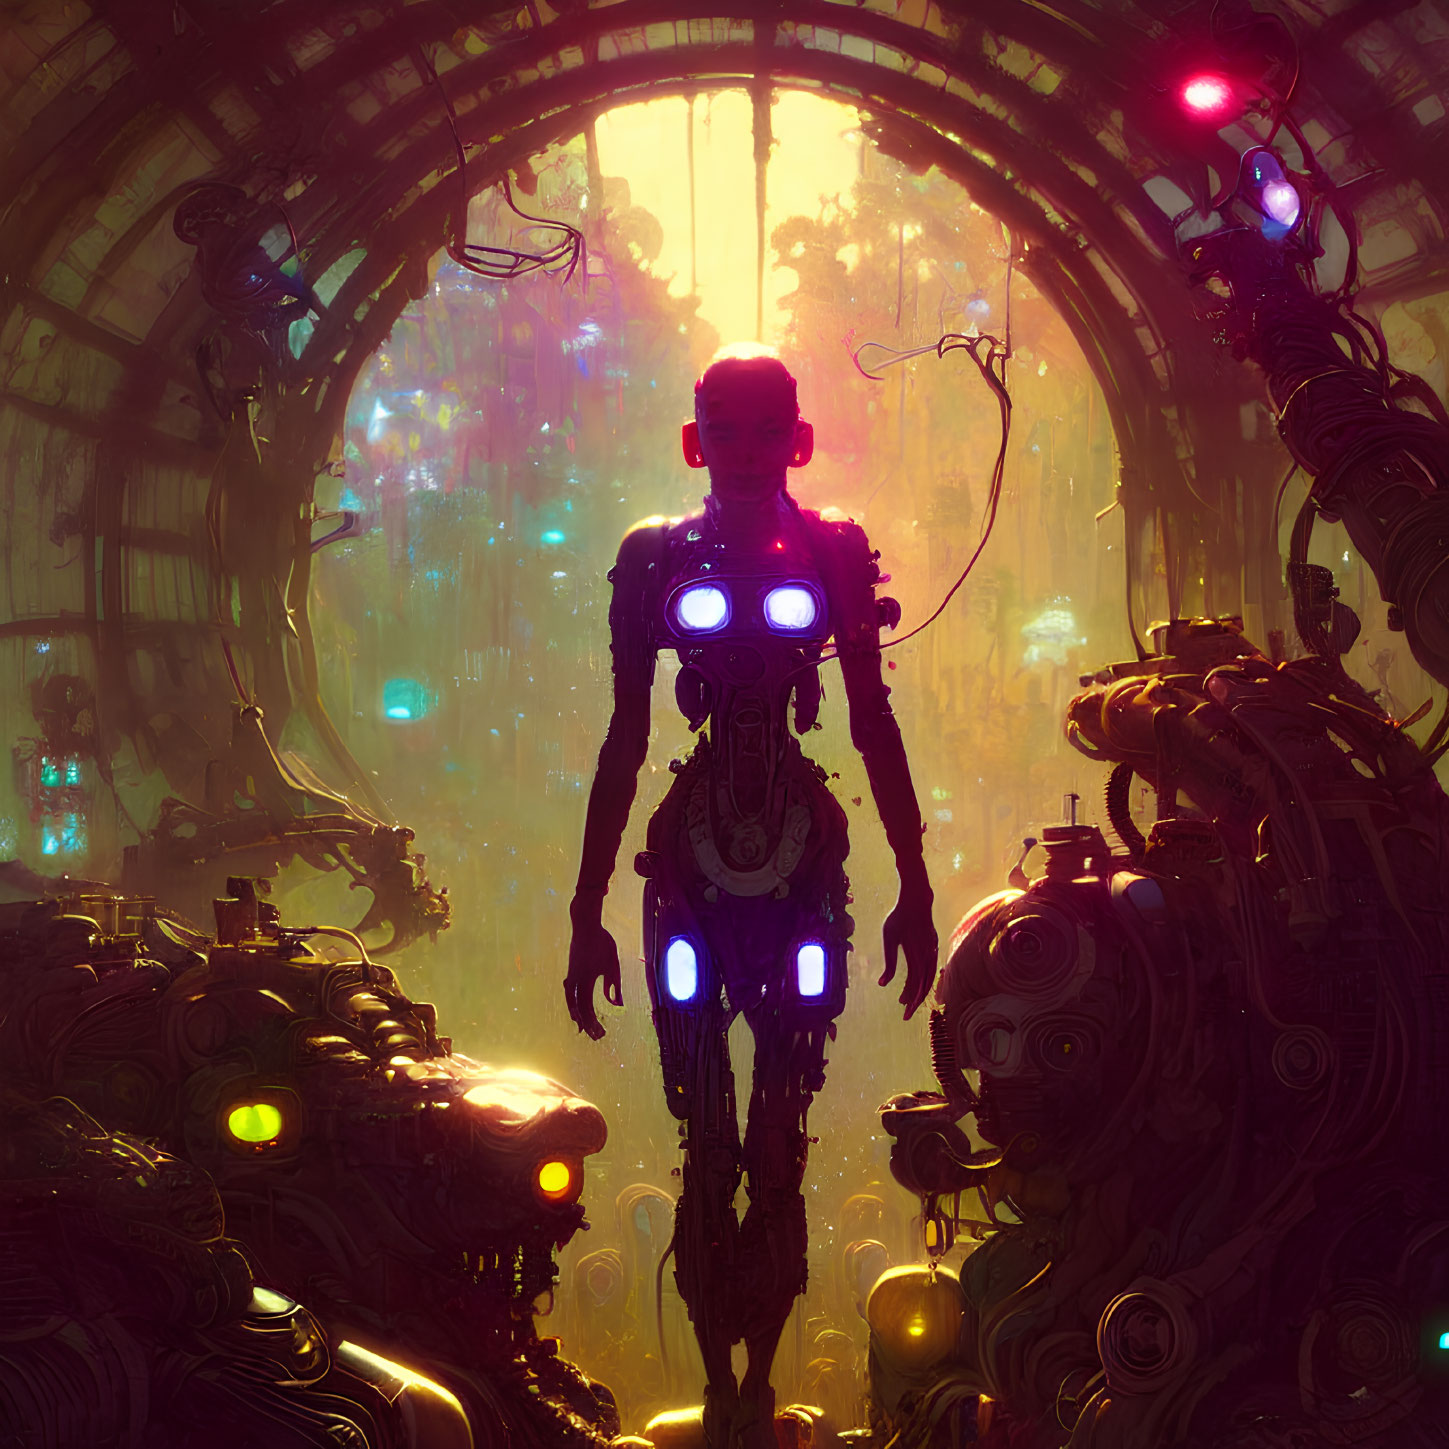 Colorful lights illuminate humanoid robot in mystical junkyard